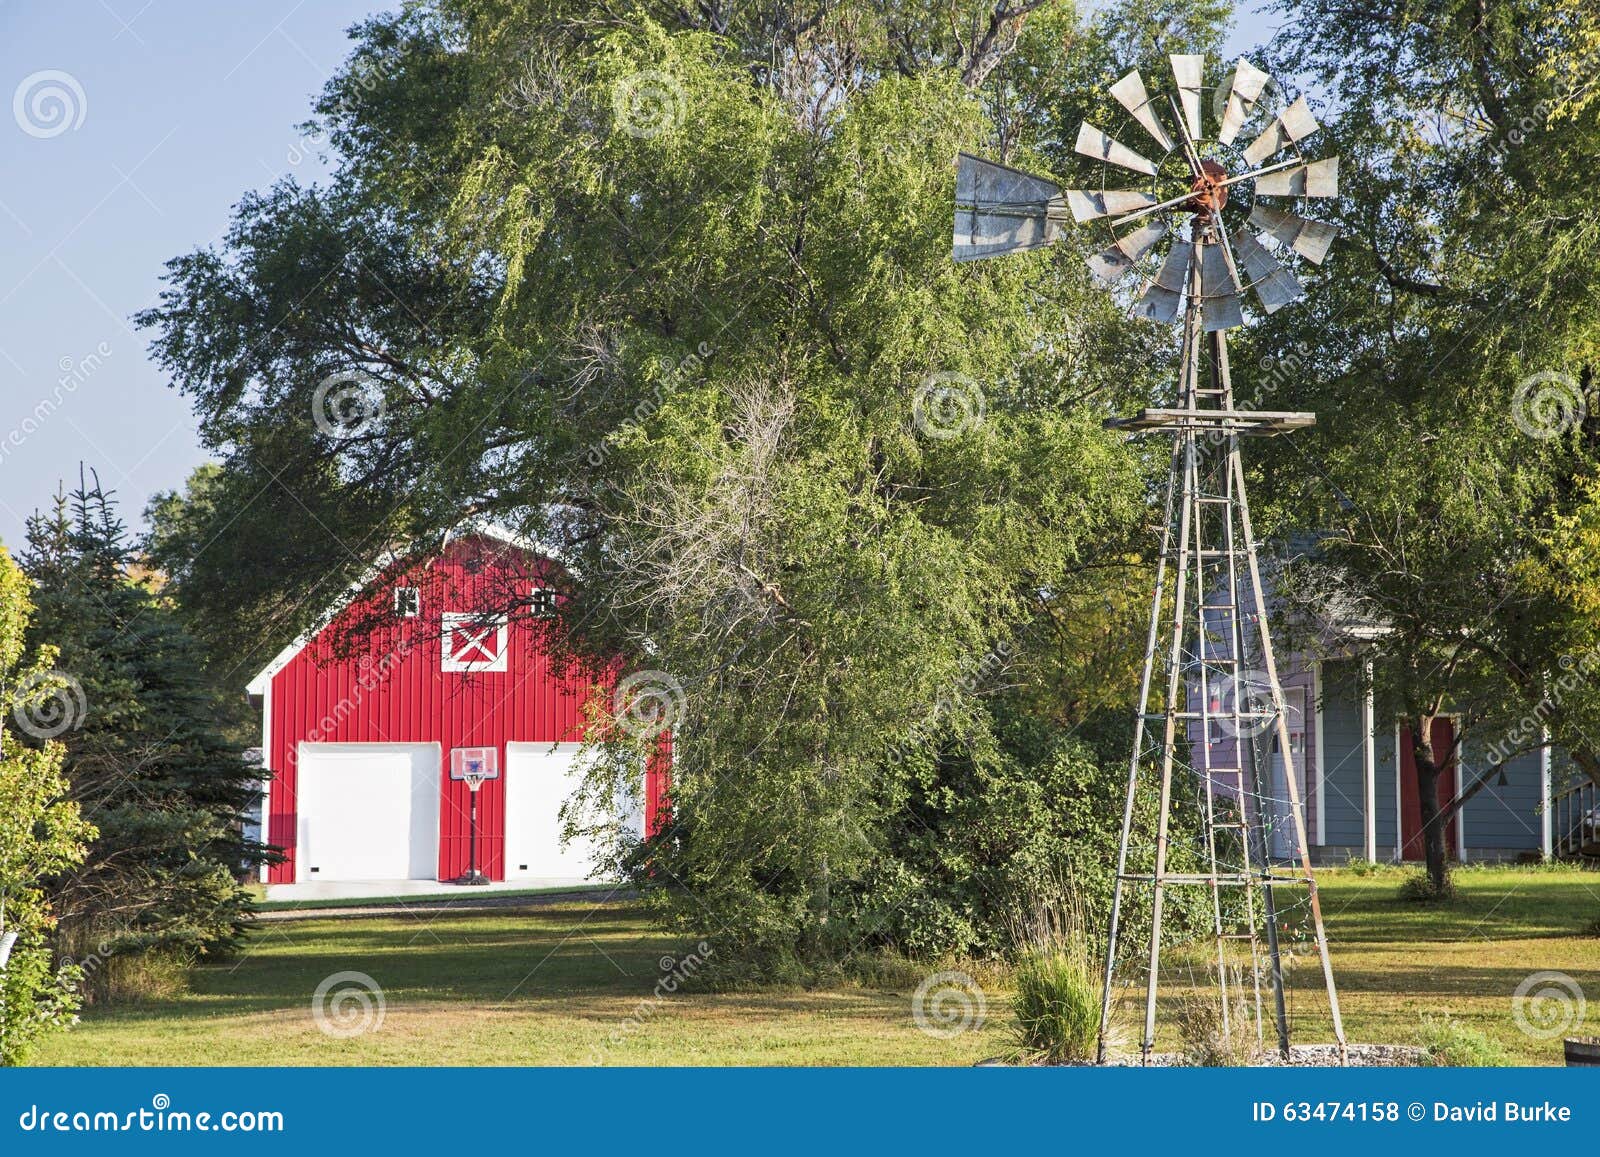 Farm House Country Scene Landscaped Stock Photo - Image 